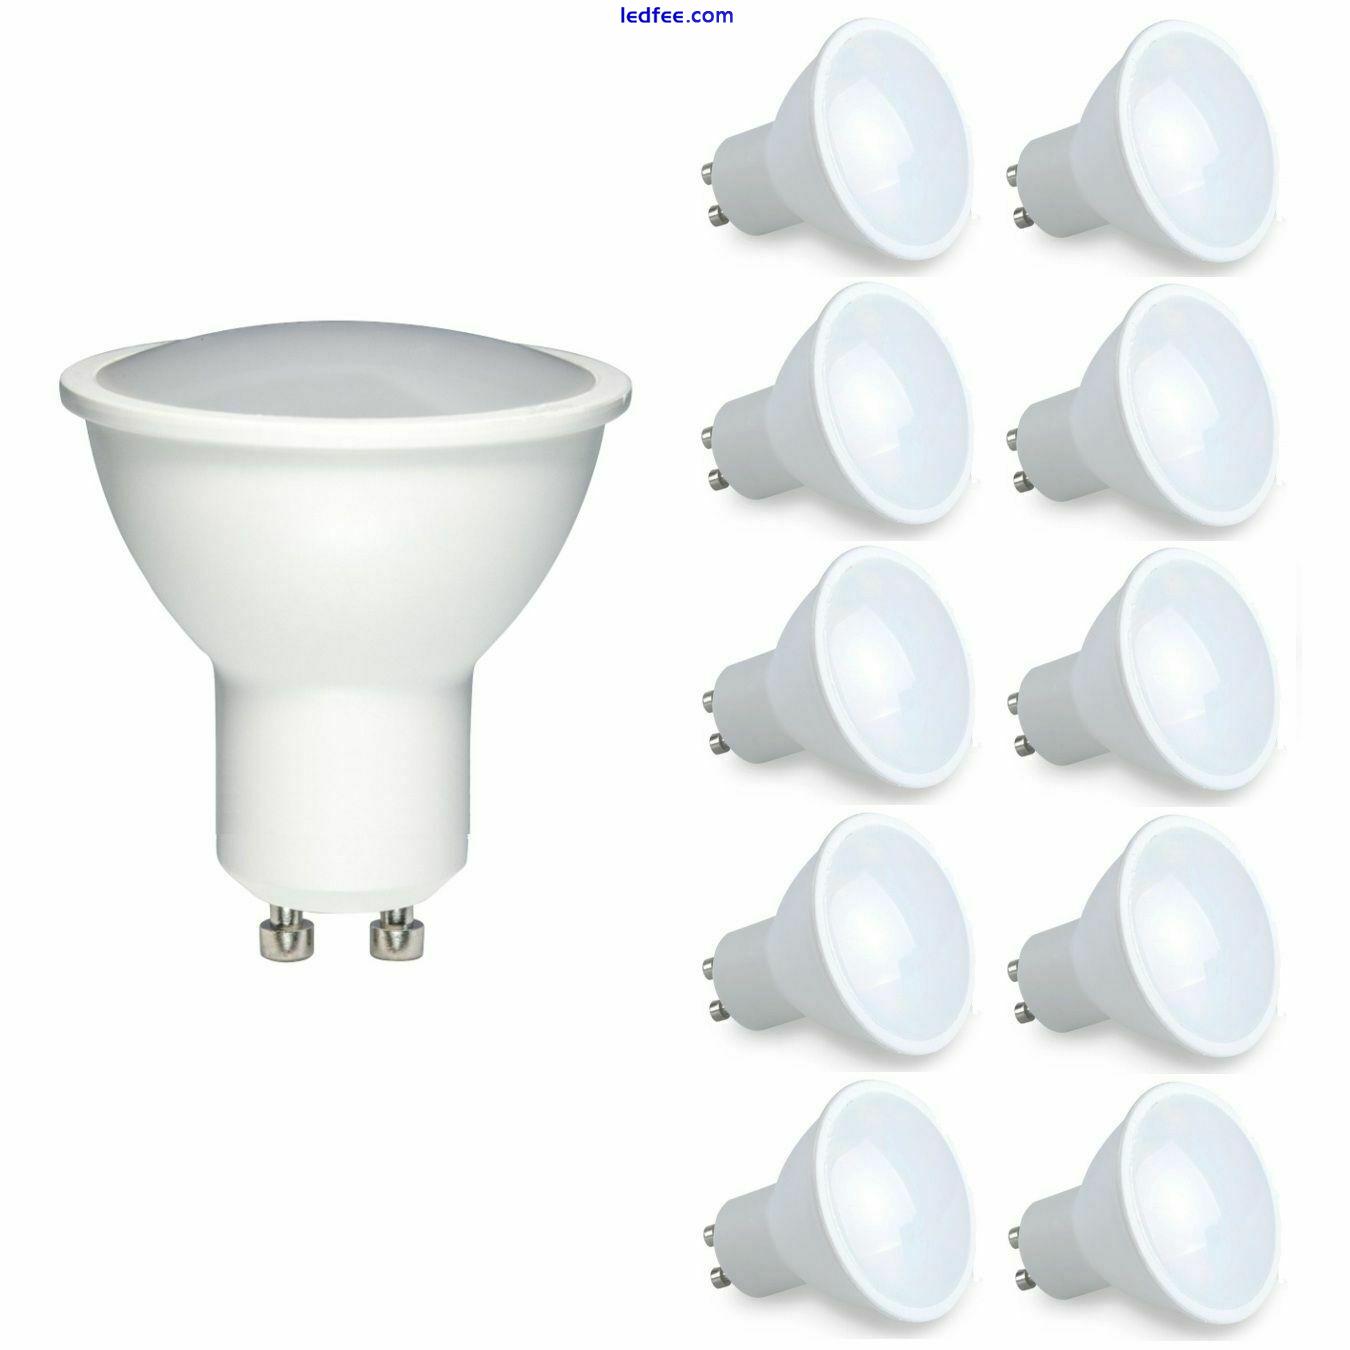 24x GU10 7W LED Light Bulb Spotlight Lamp Cool white 6500K Equals 70W Halogen 0 